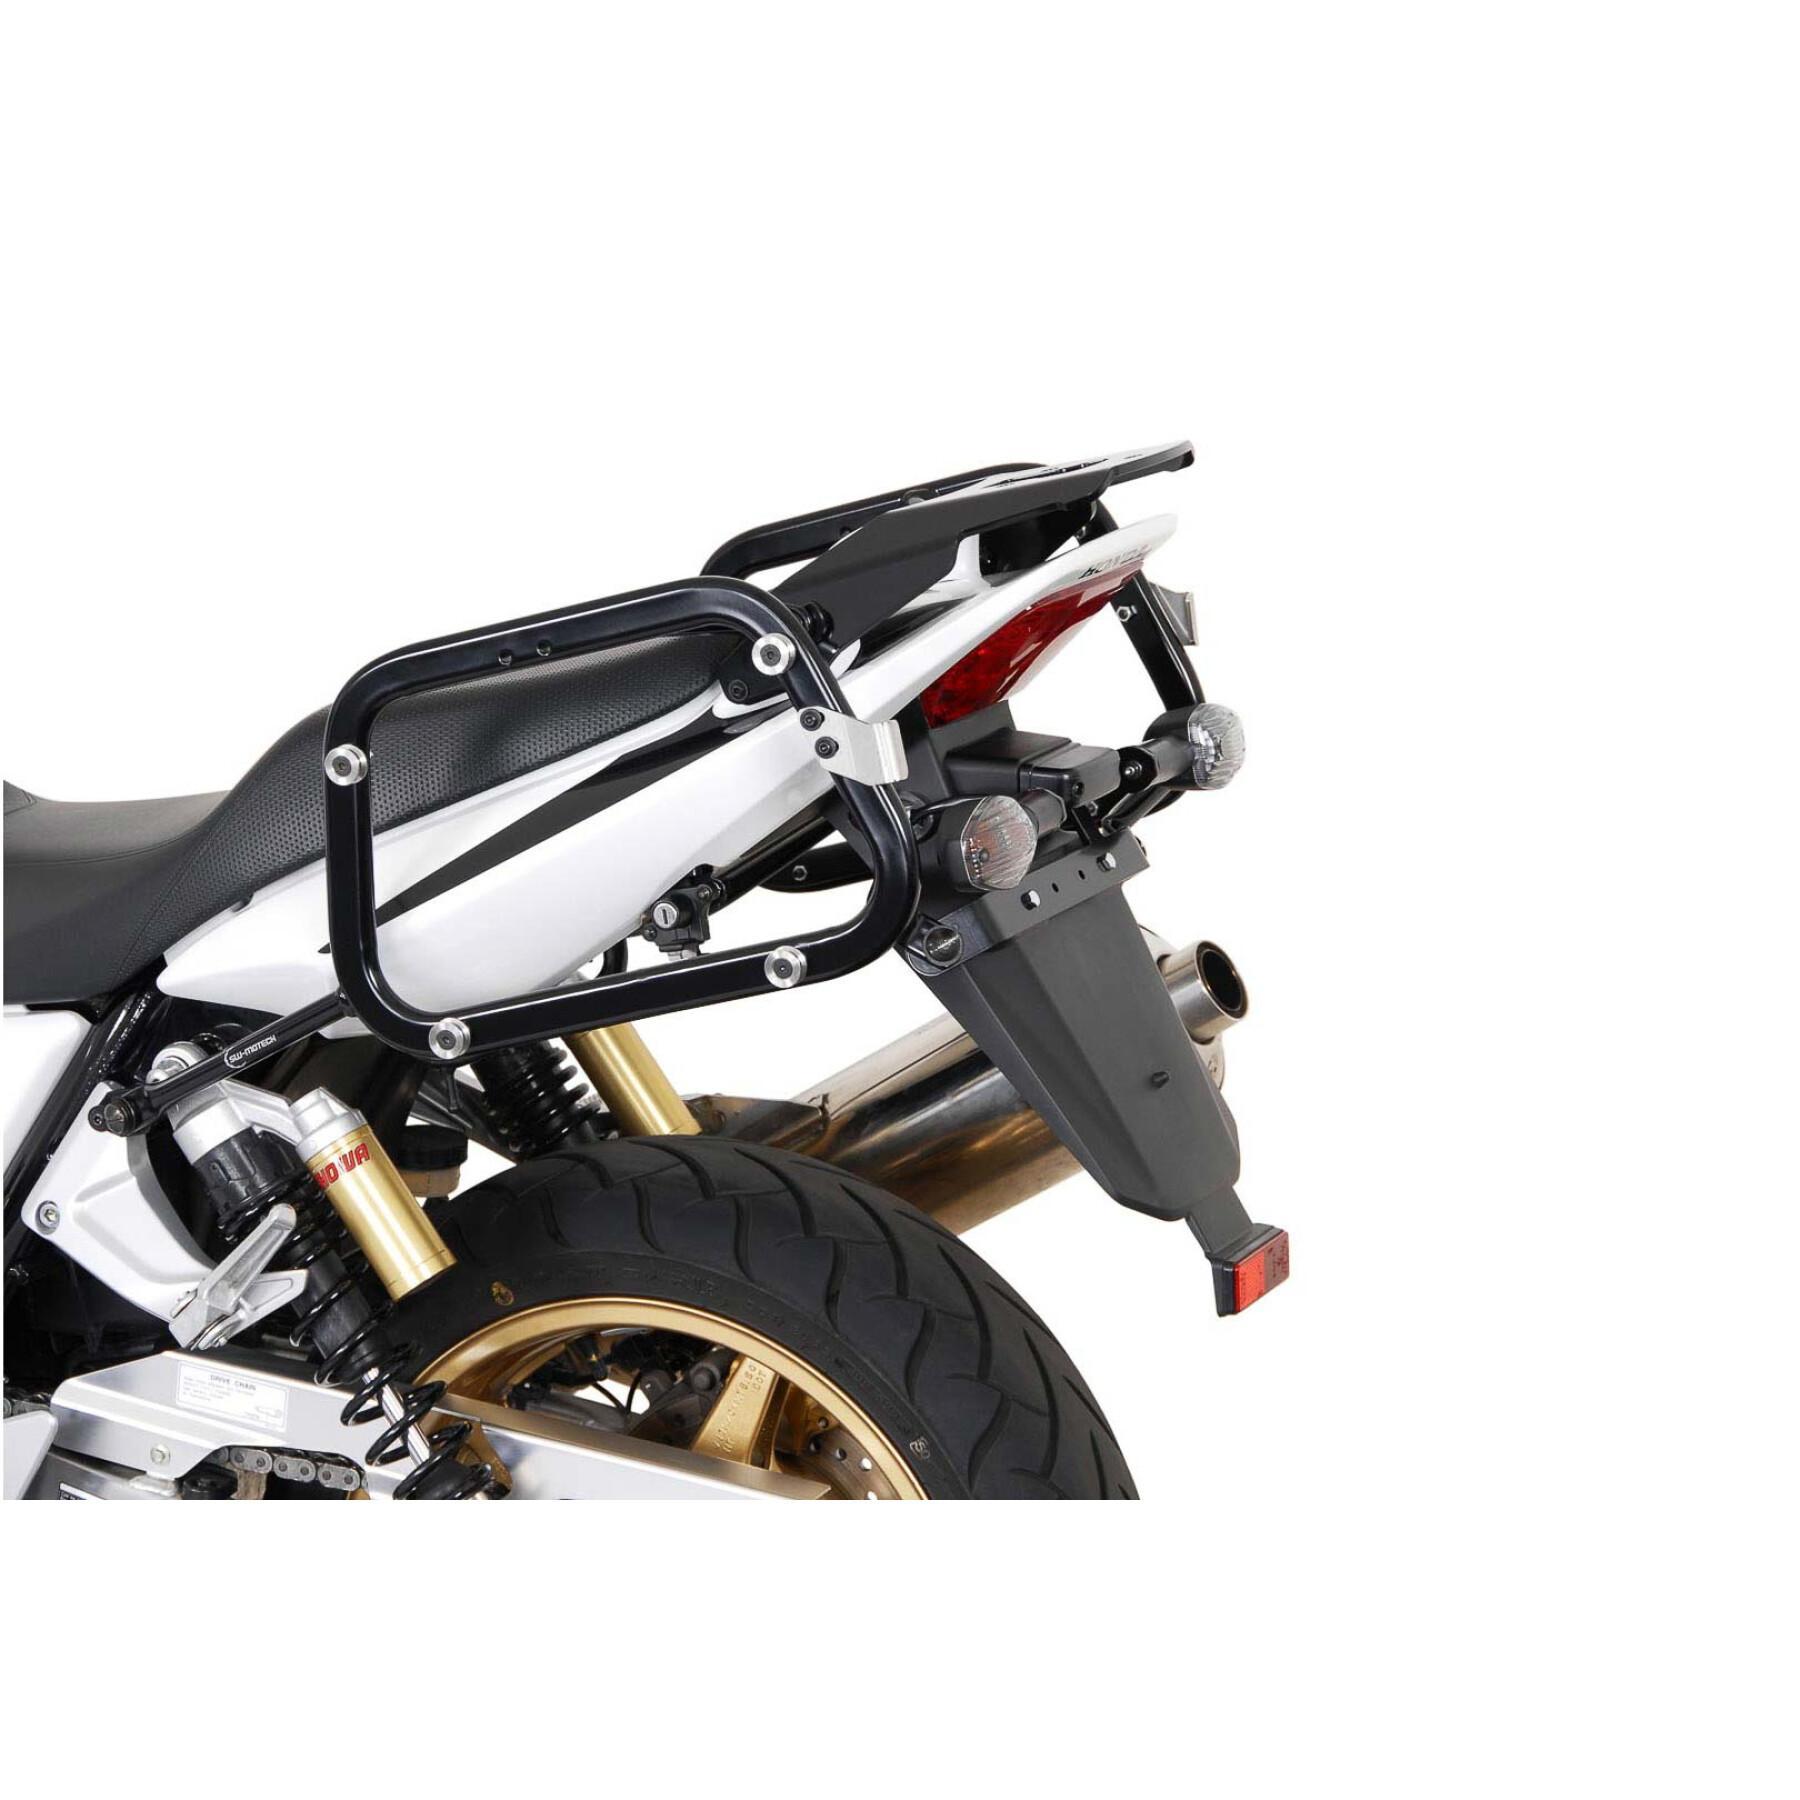 Motorcycle side case support Sw-Motech Evo. Honda Cb 1300 (03-09)/ S (05-09)